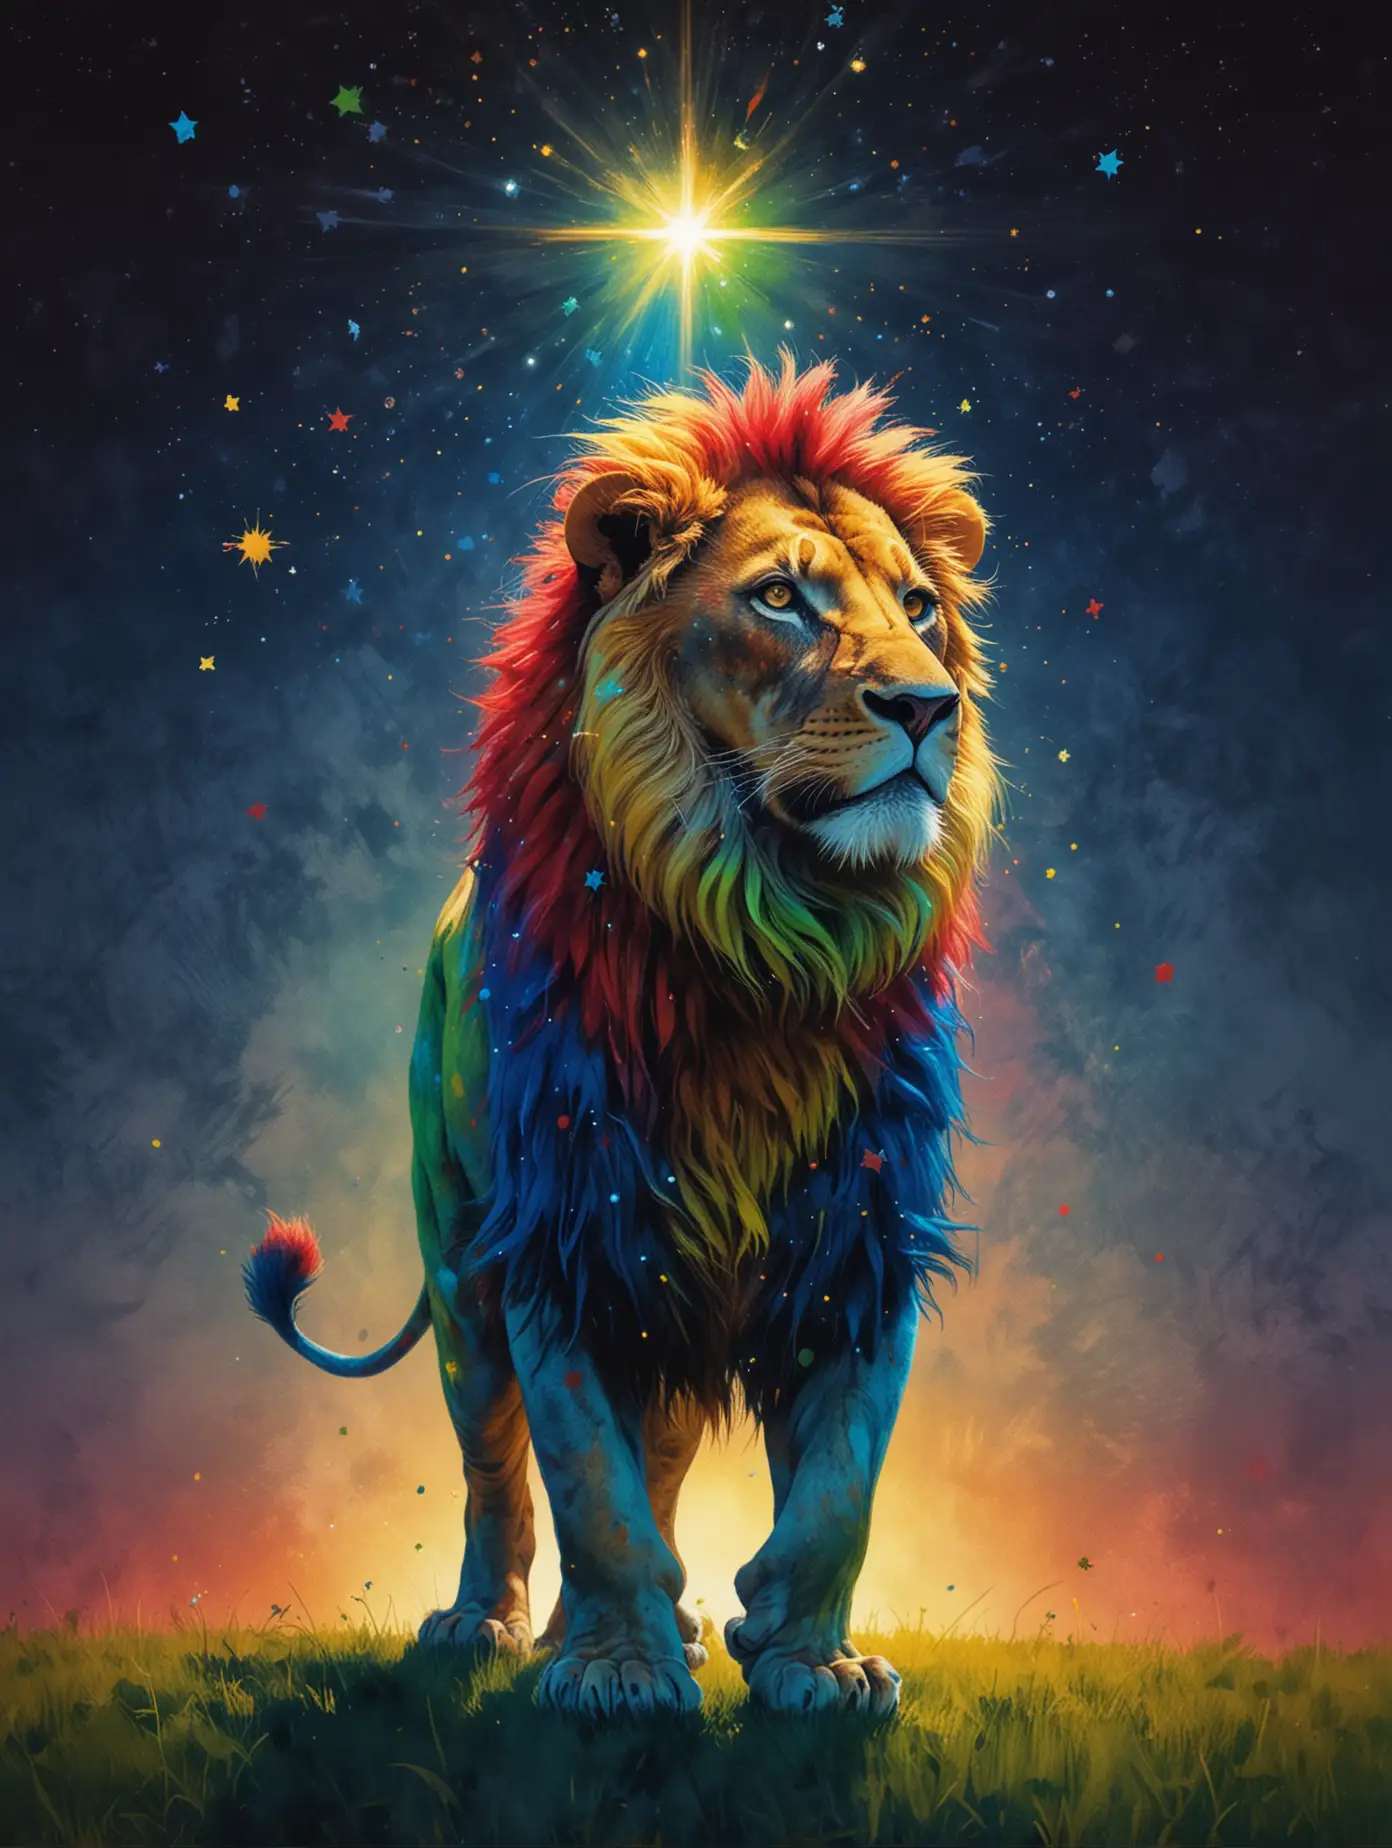 Lion Walking at Night Under Bright Star Classy Artistic Tie Dye Minimalist Image